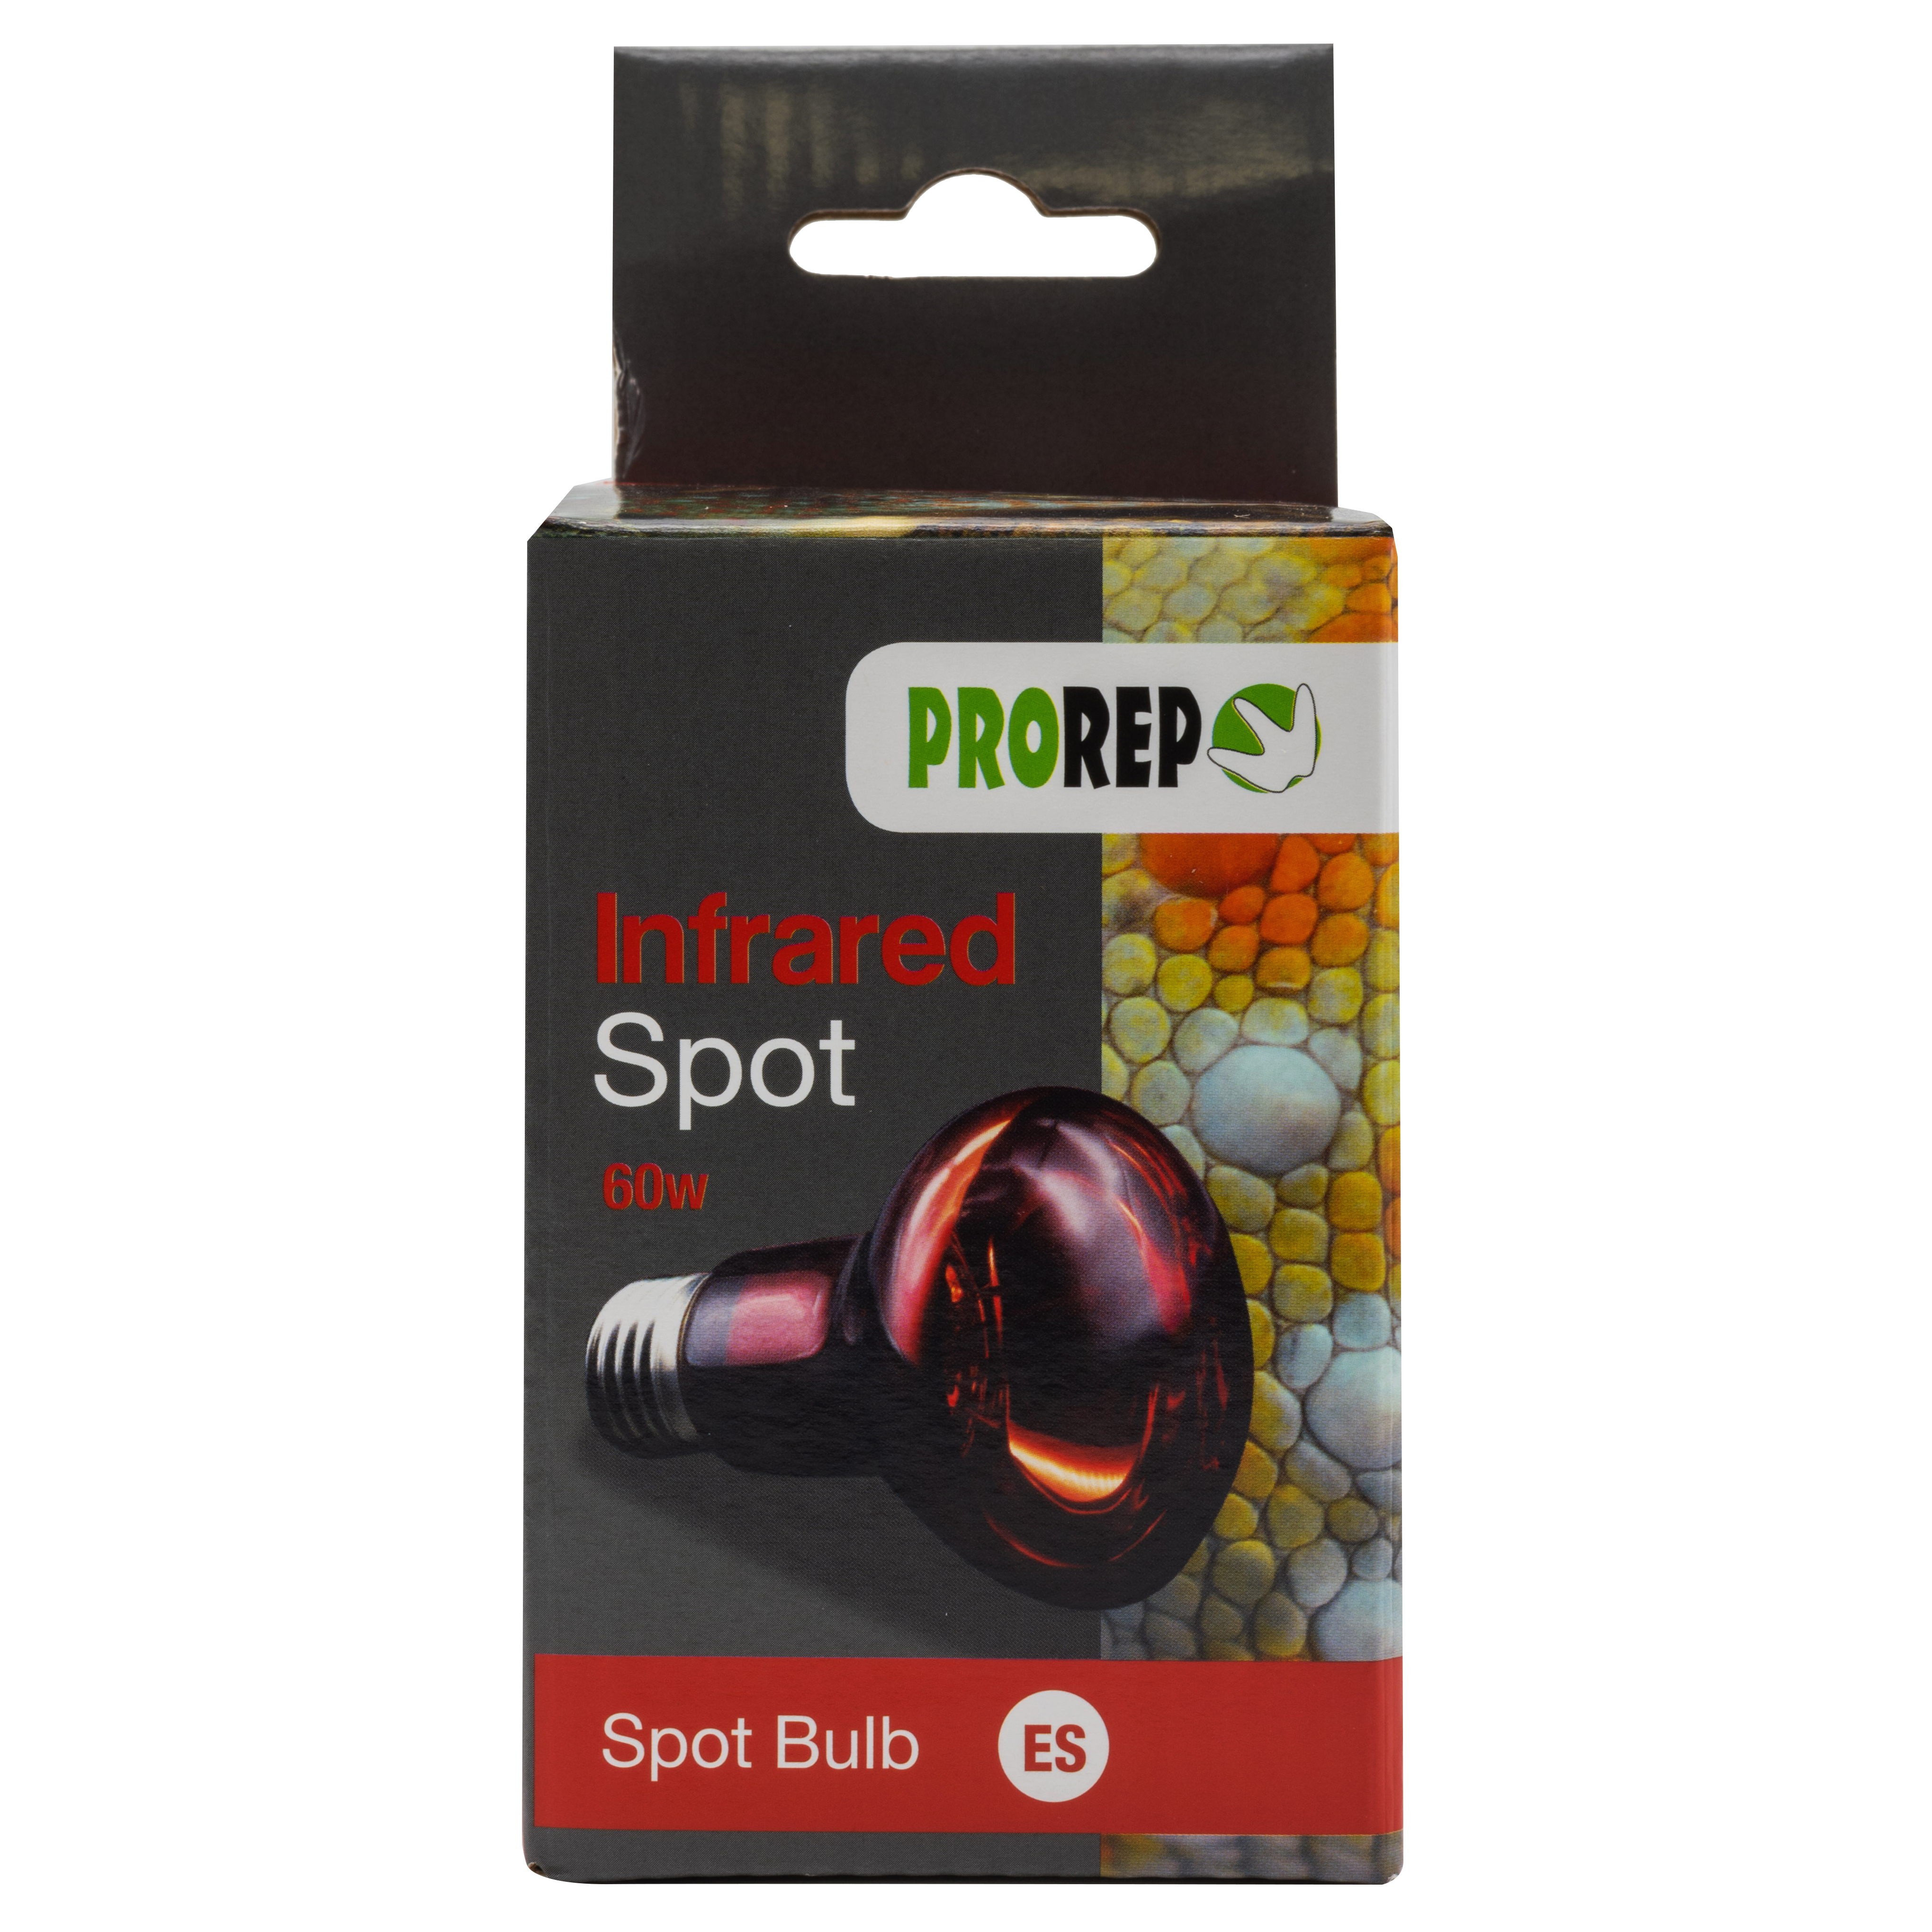 ProRep Infrared Spot Lamp 60w ES